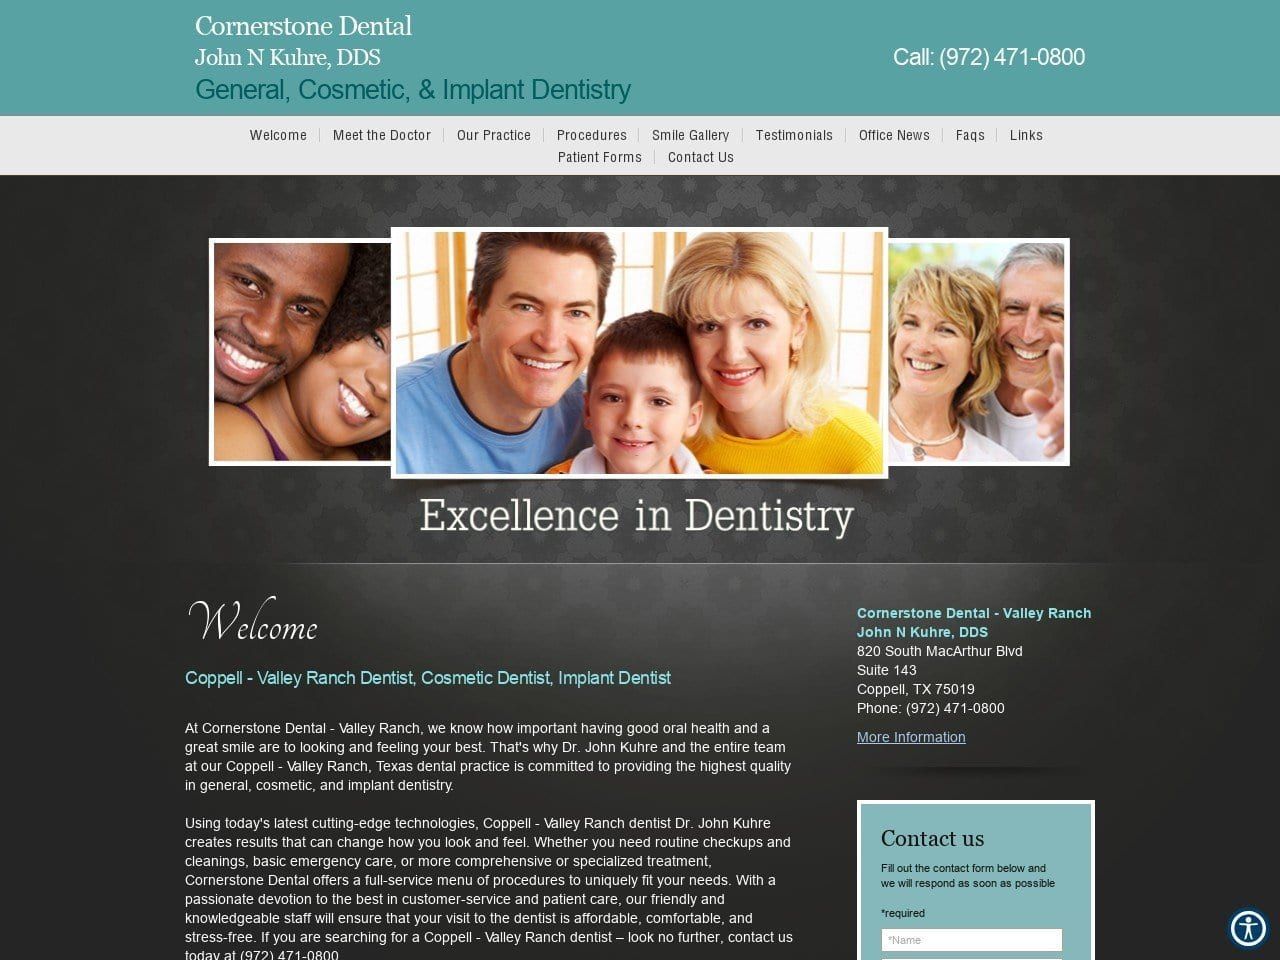 Cornerstone Dental Website Screenshot from cornerstone-dental.com